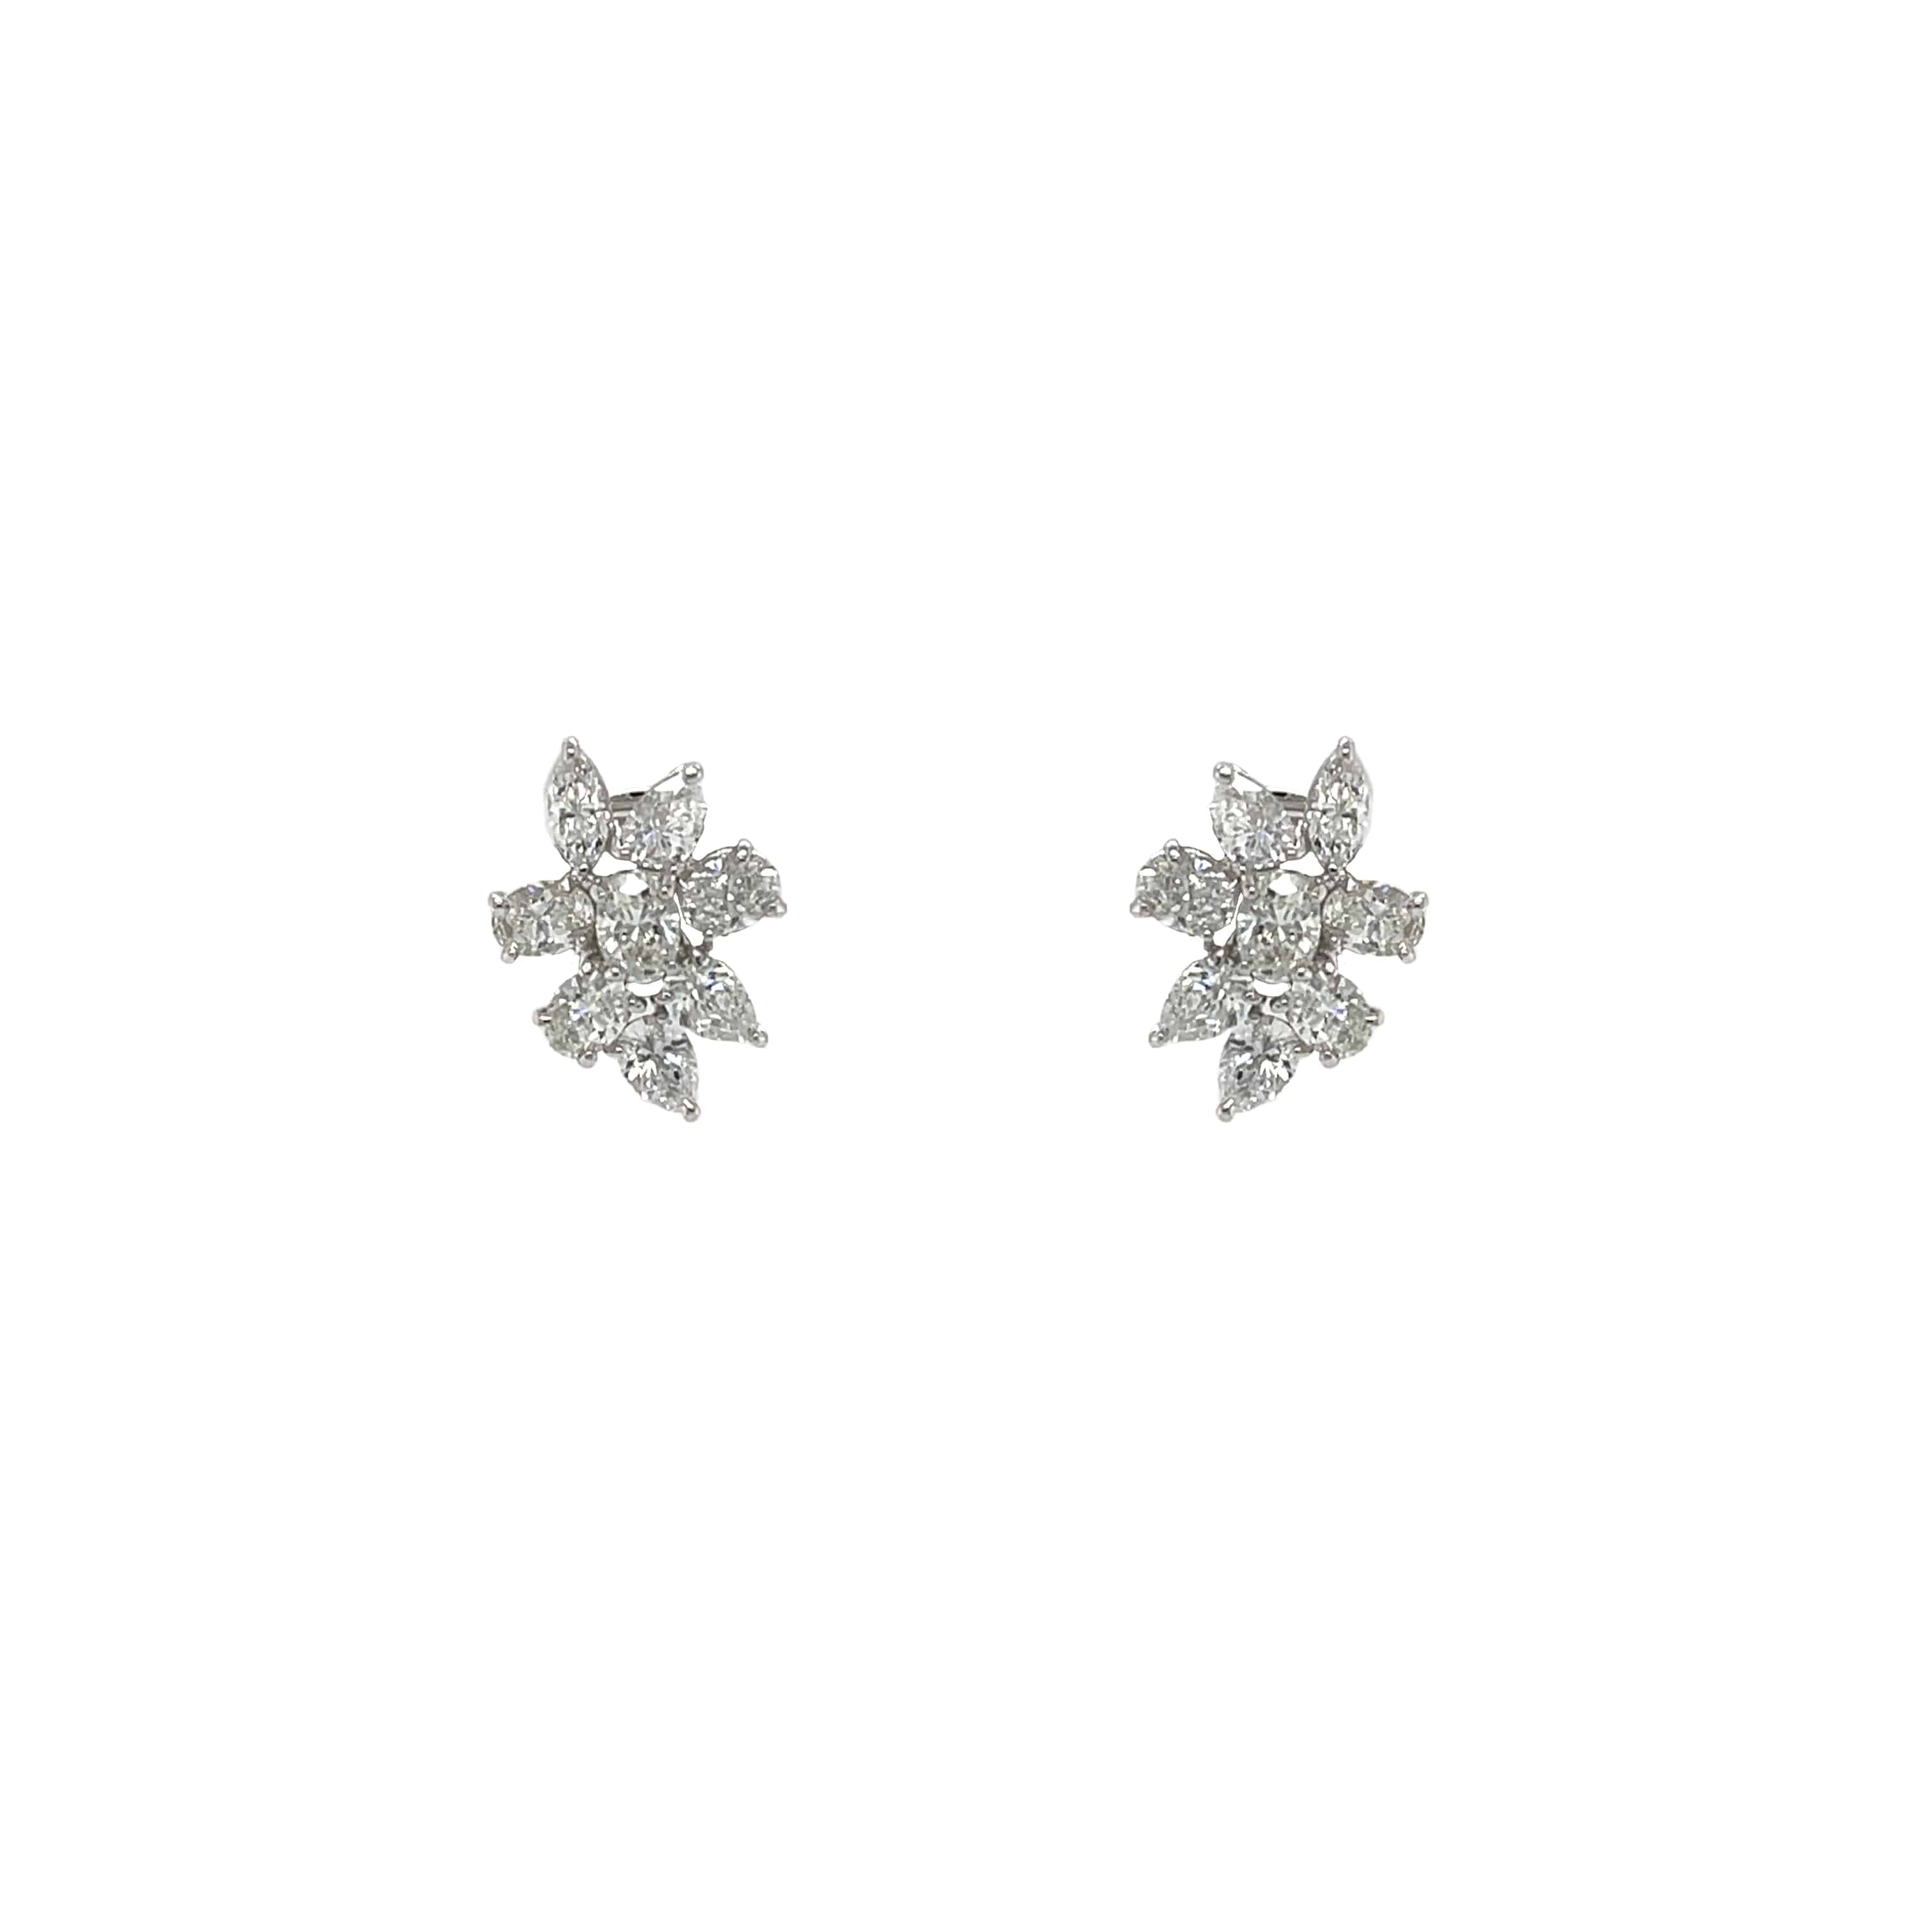 transformational-diamond-south-sea-pearl-earrings-43627912233124.jpg